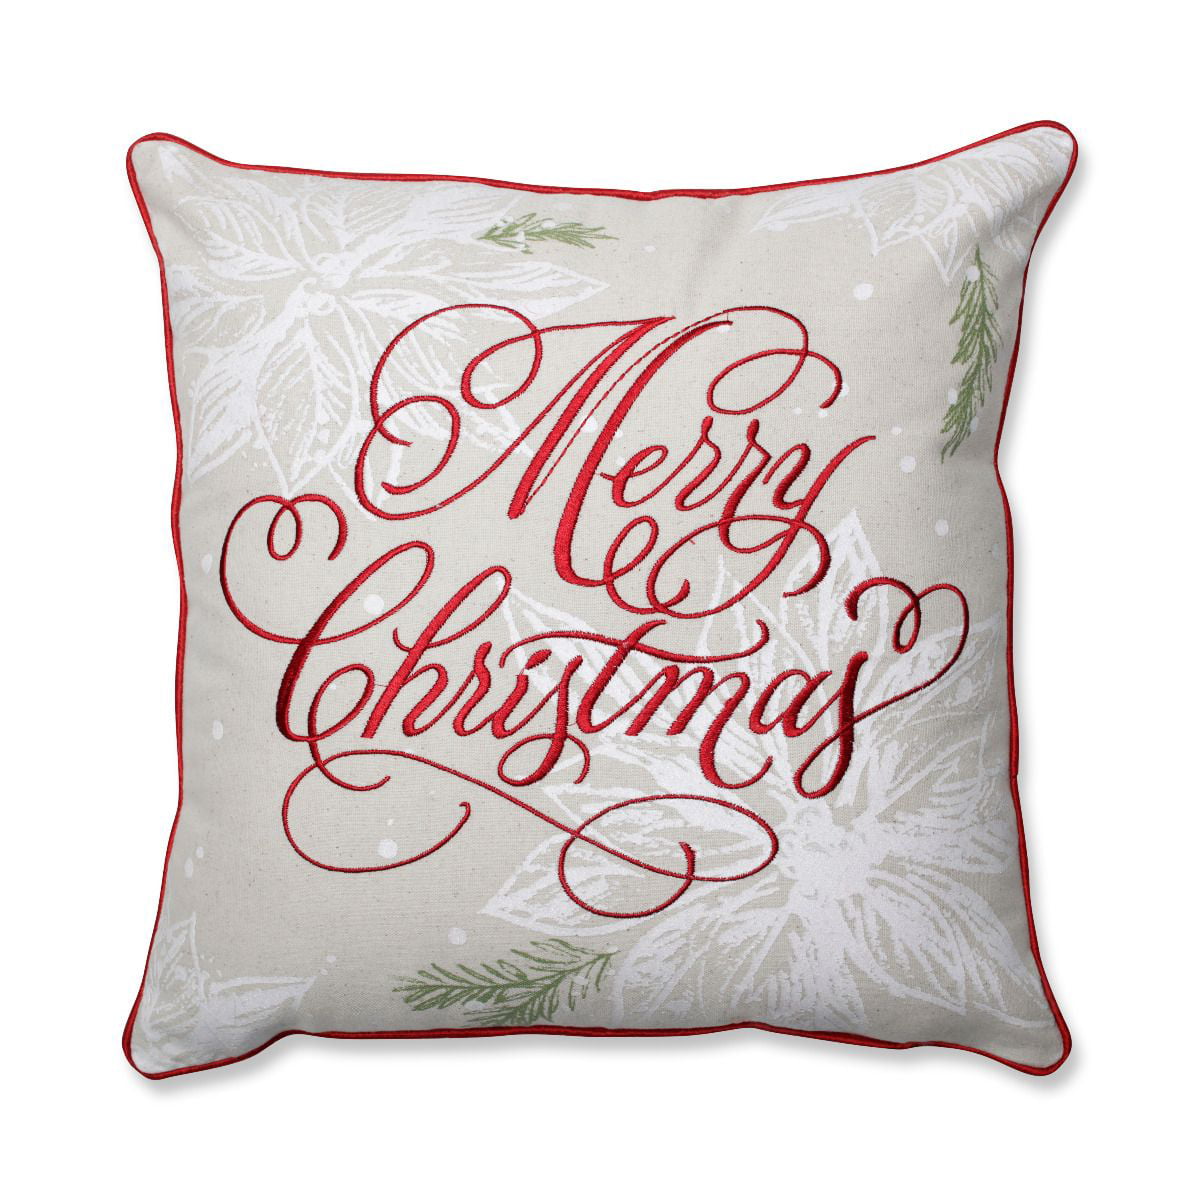 Minimalist Decorative Christmas Pillows for Simple Design